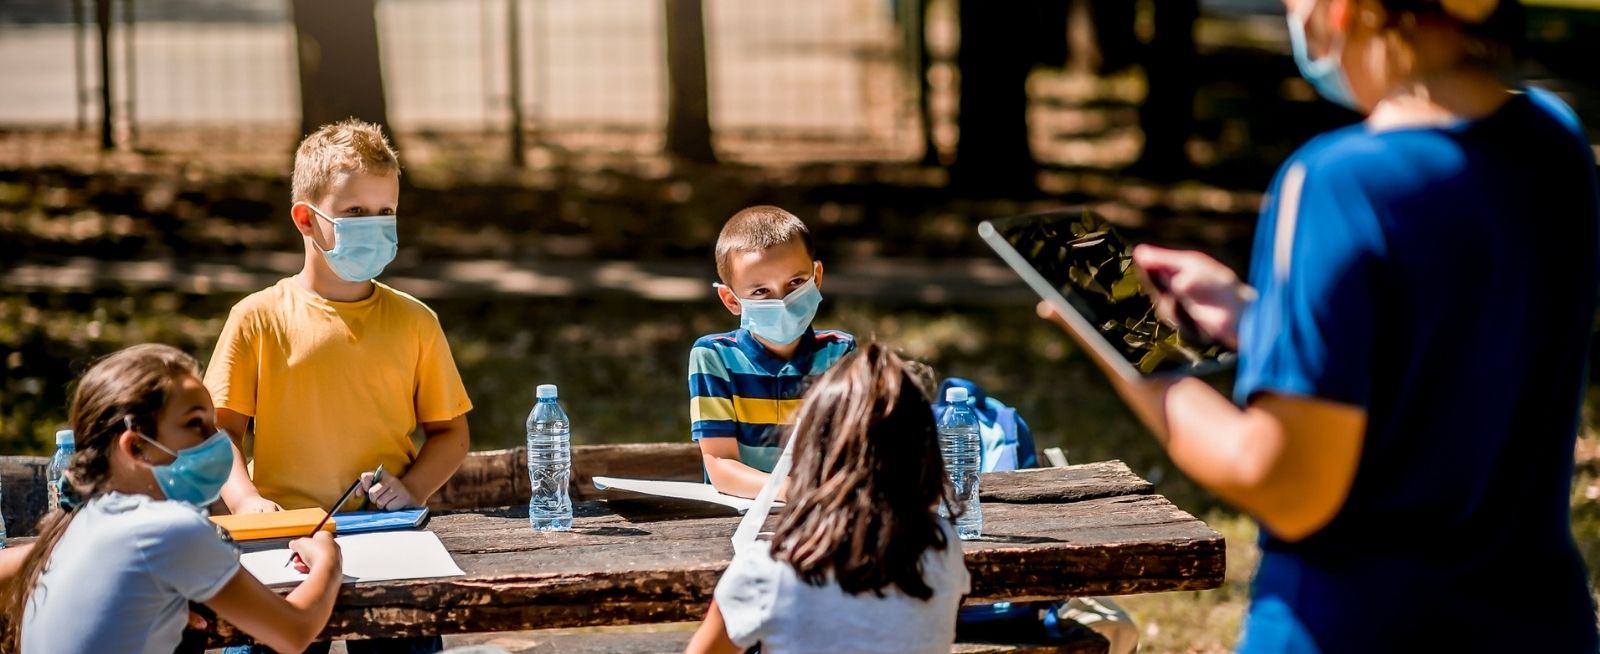 Group of school children with masks enjoying a class with their teacher outdoors